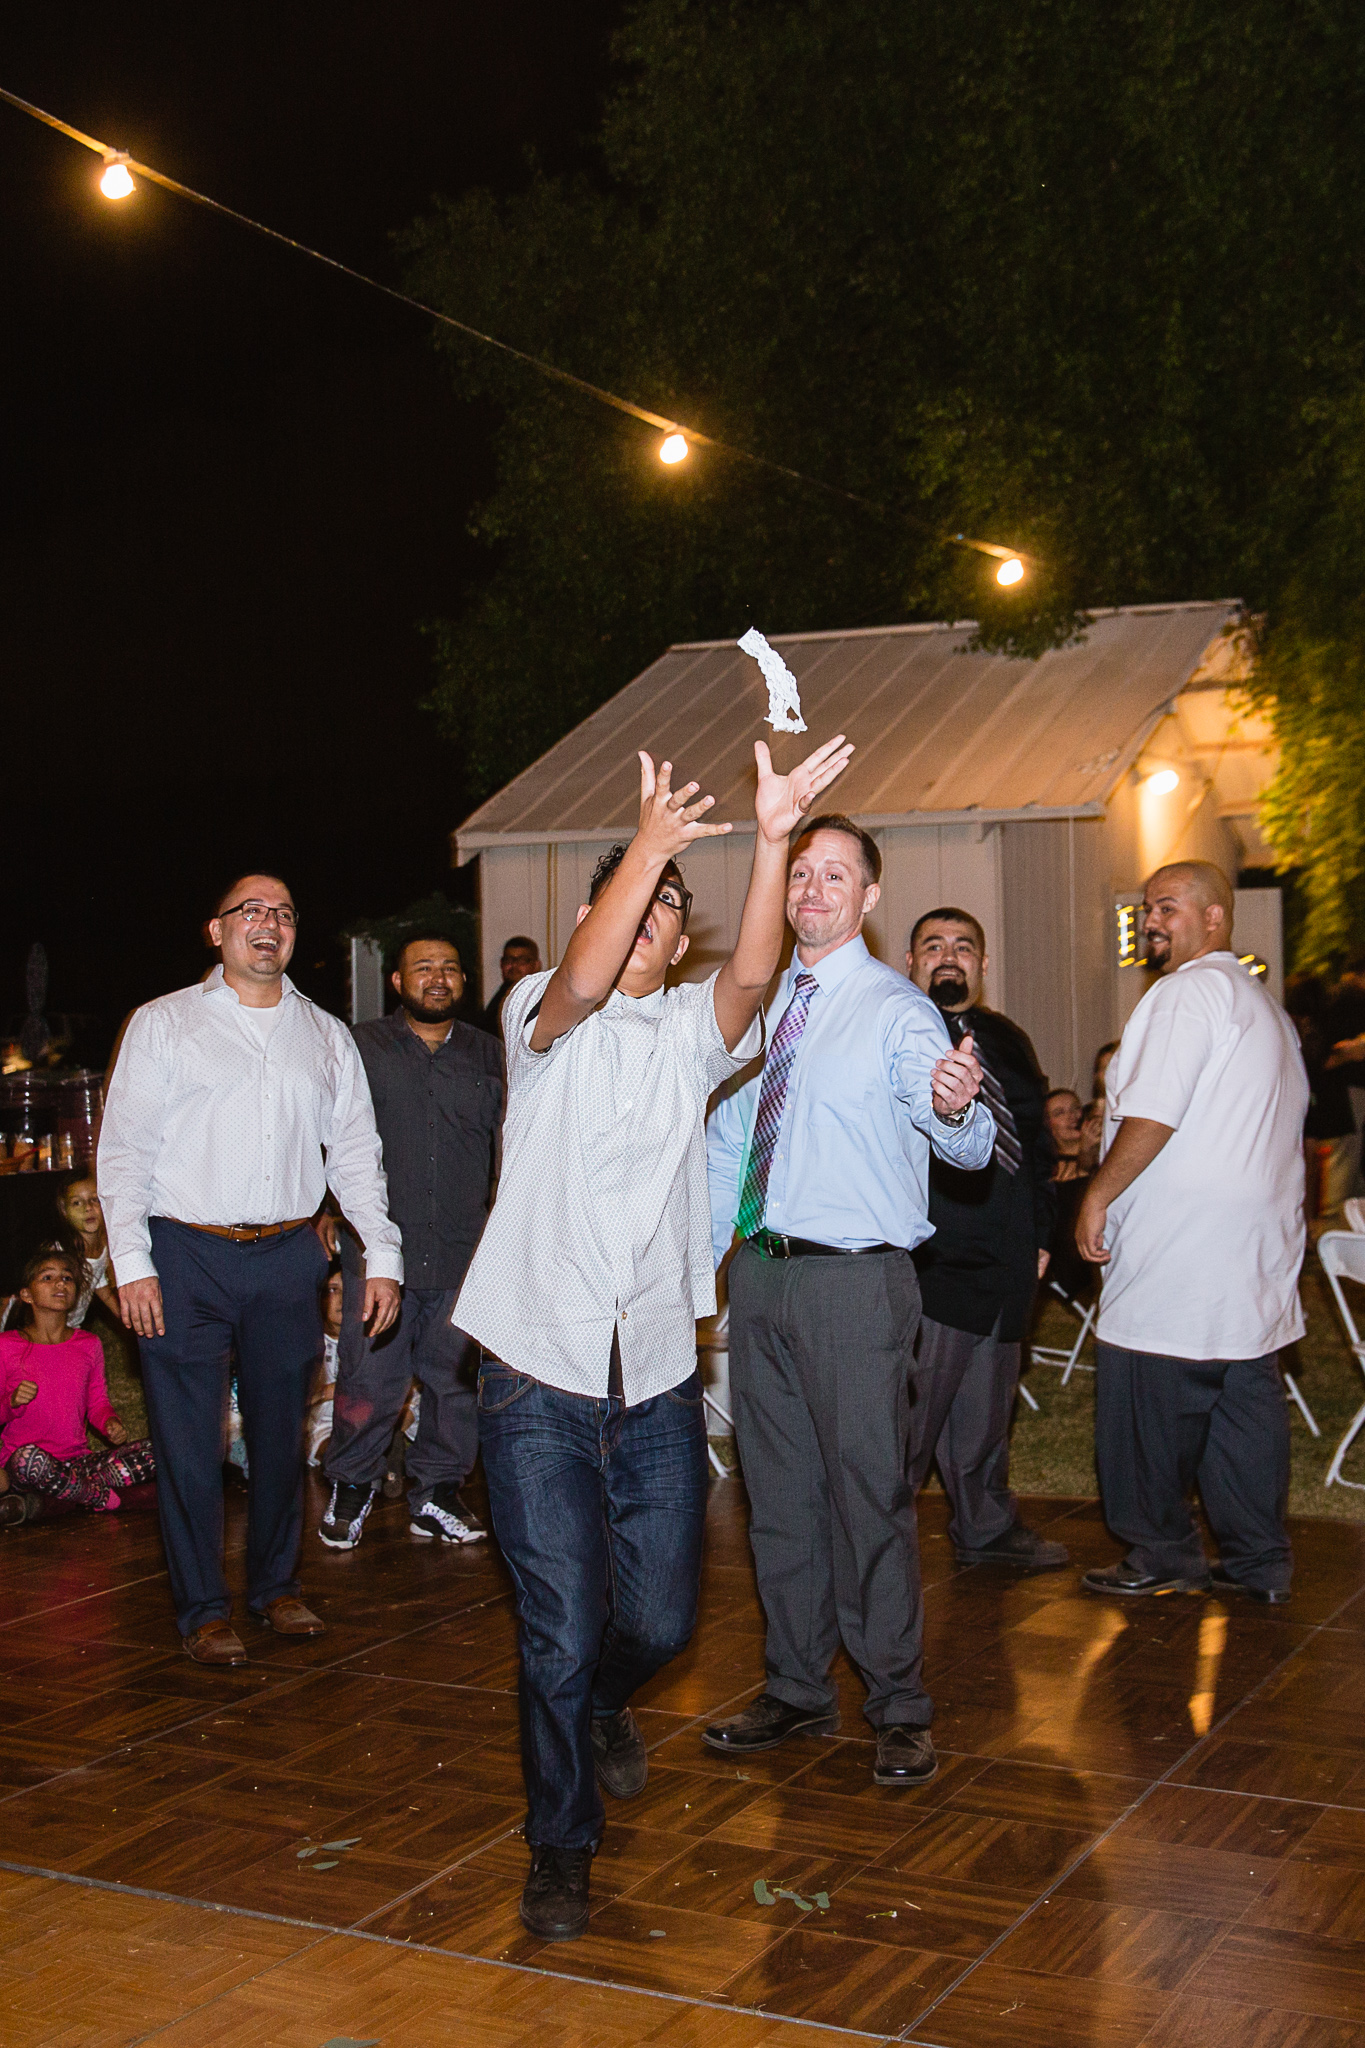 Garter toss at a backyard wedding reception by PMA Photography.